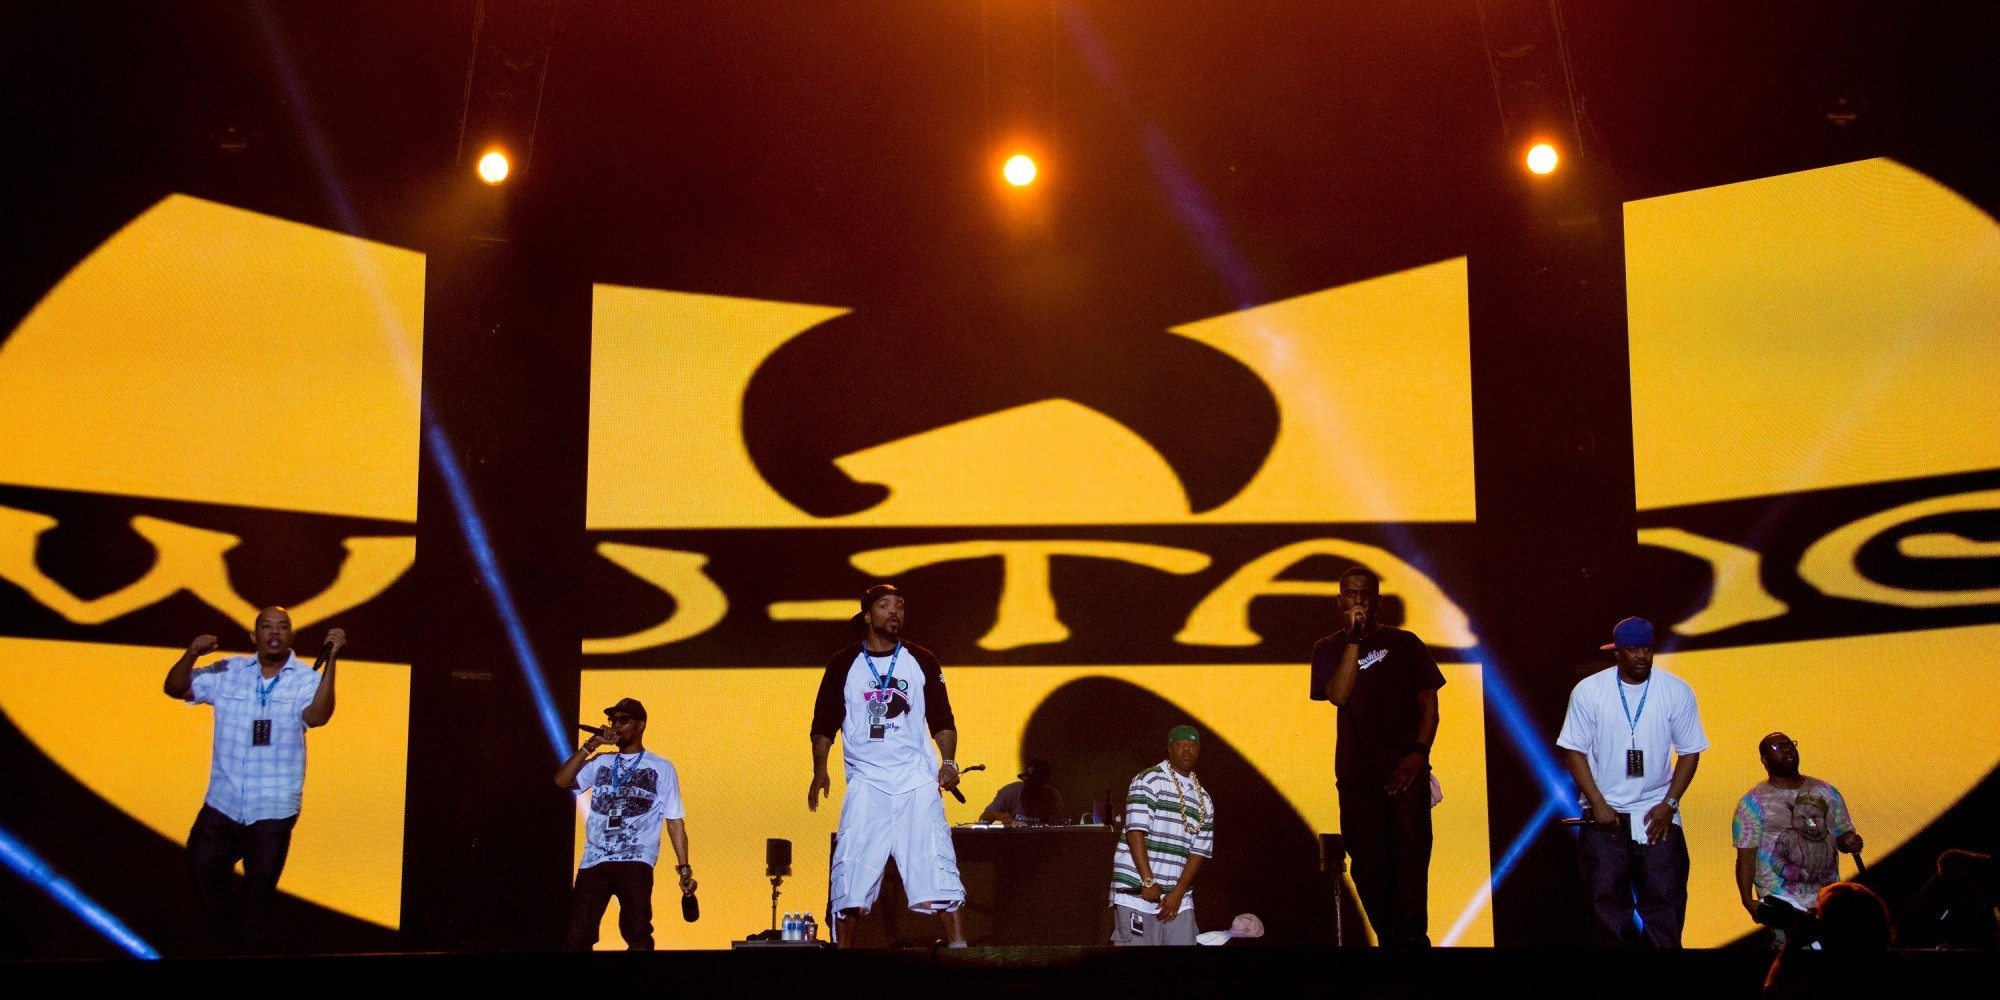 Members of the Wu-Tang Clan are set to headline new Bangkok music festival 